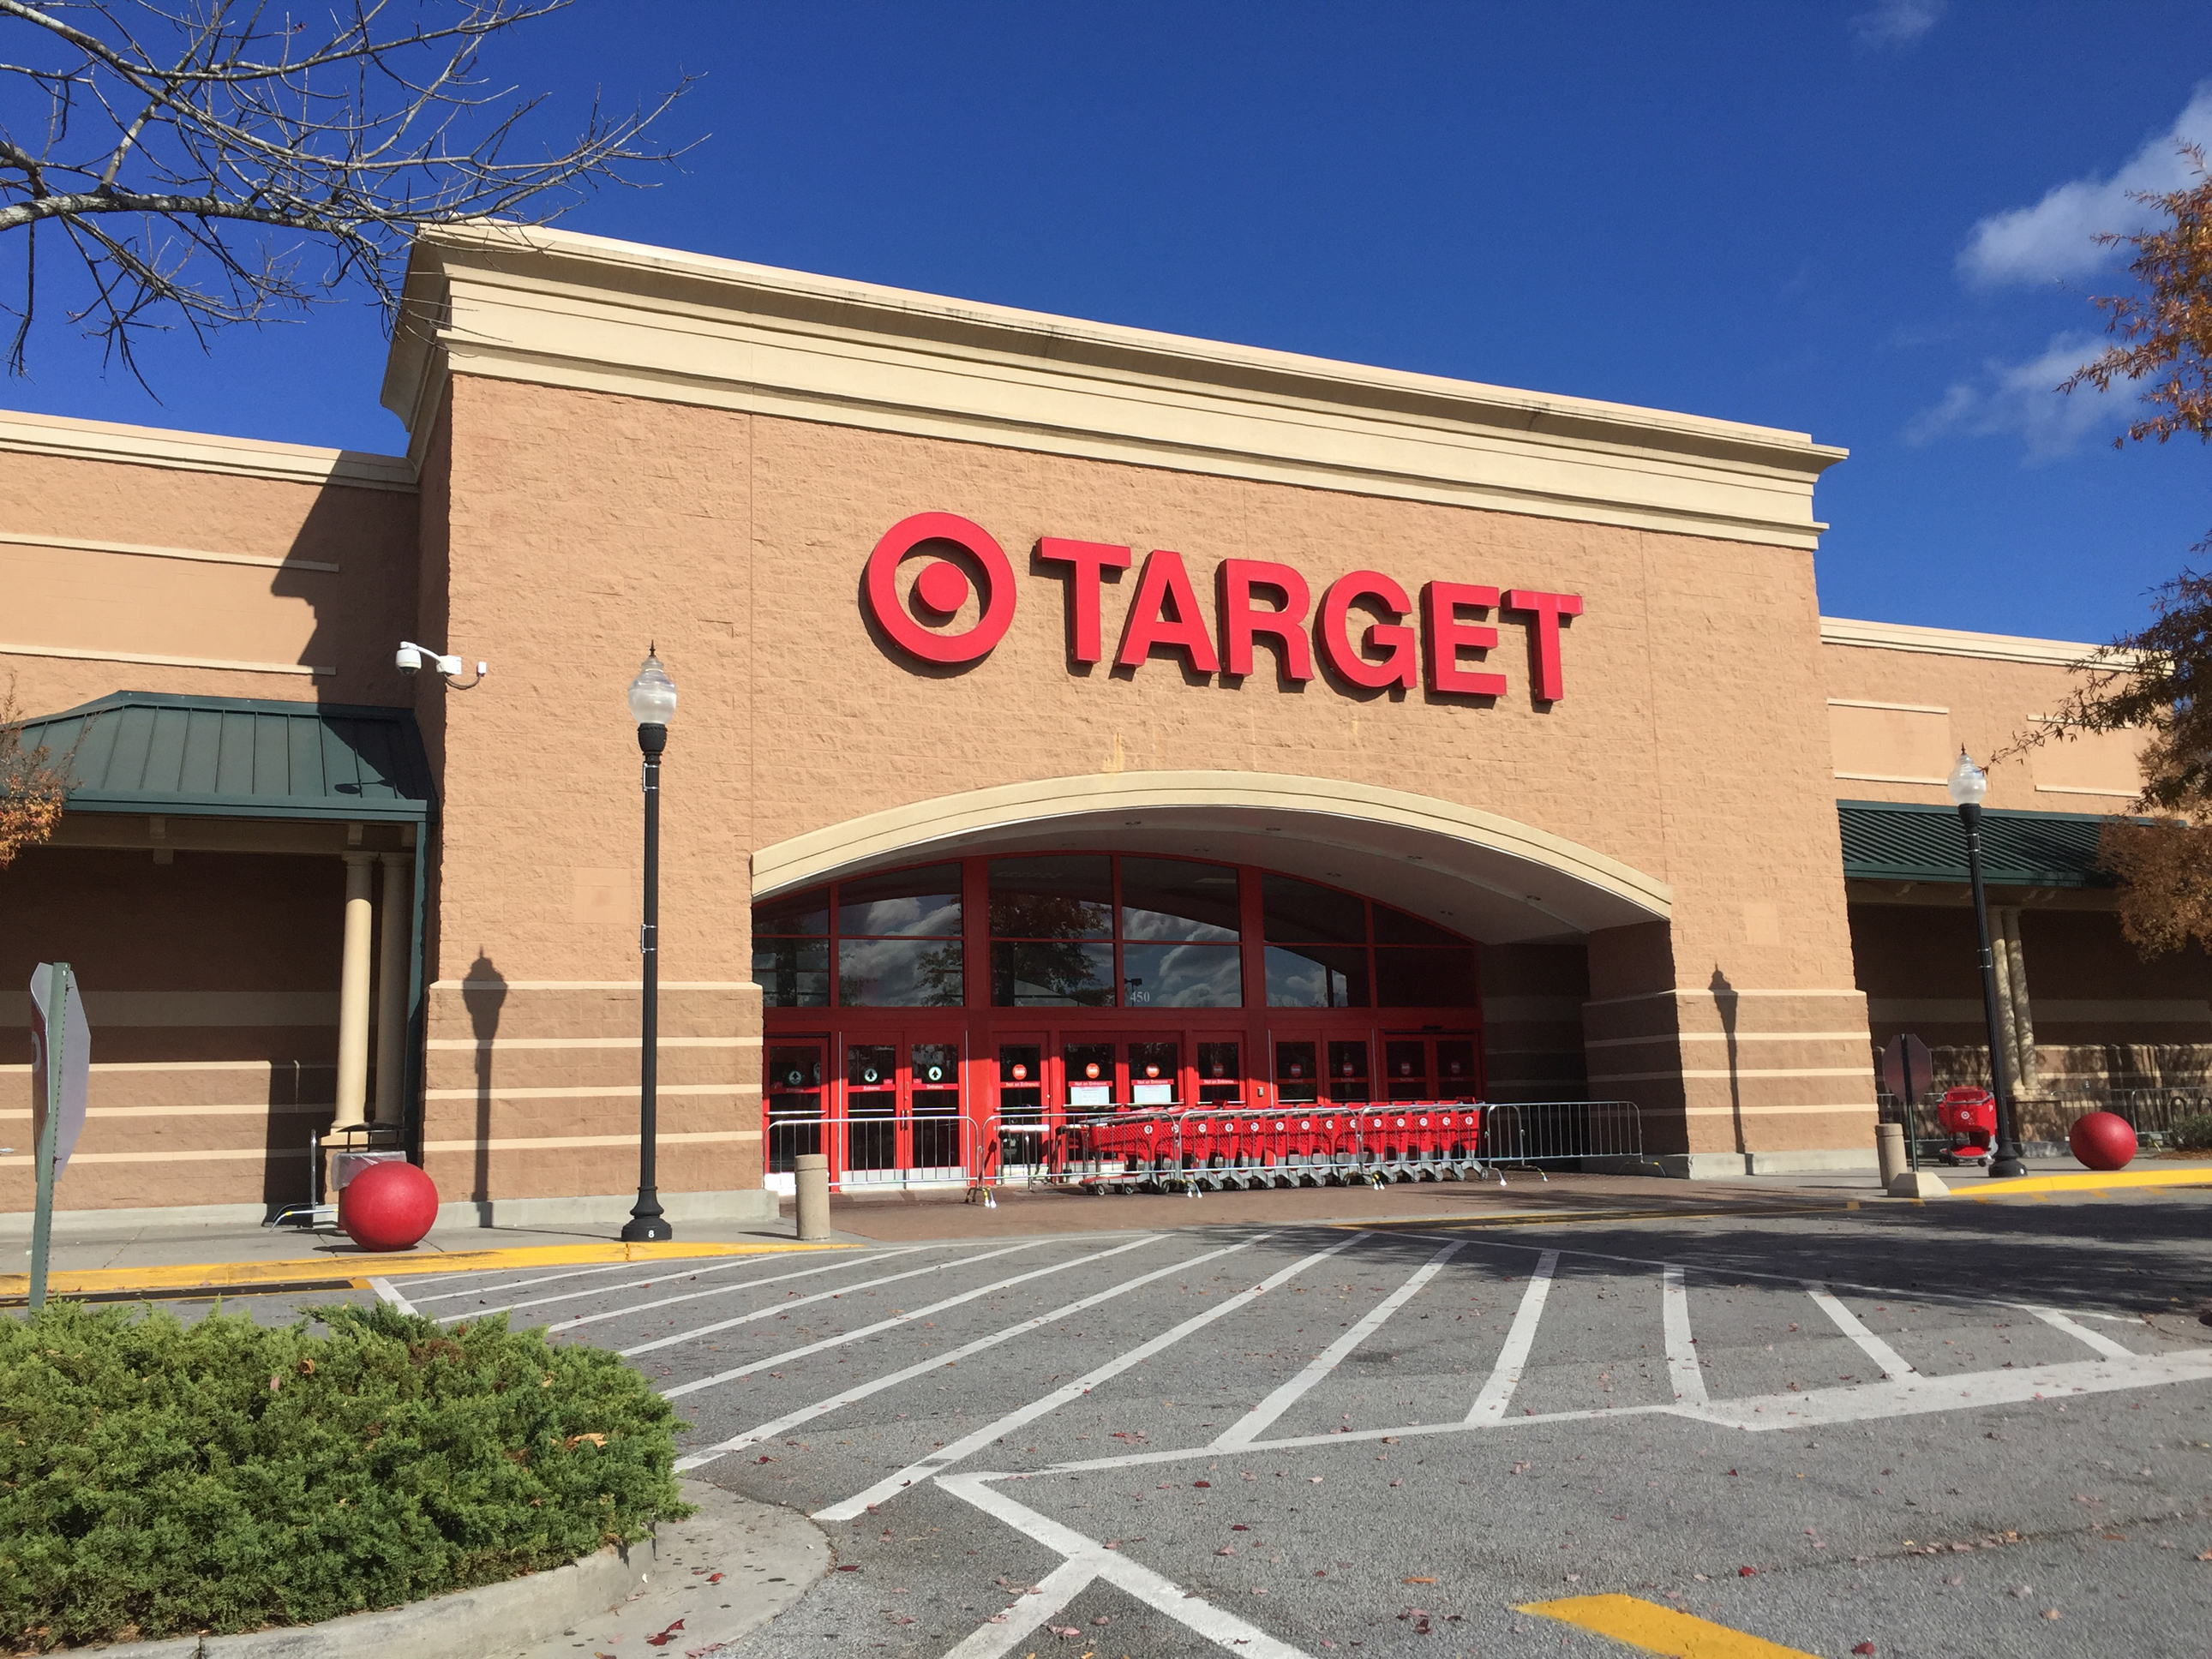 Retail alert: Target is closing these underperforming stores | Clark Howard